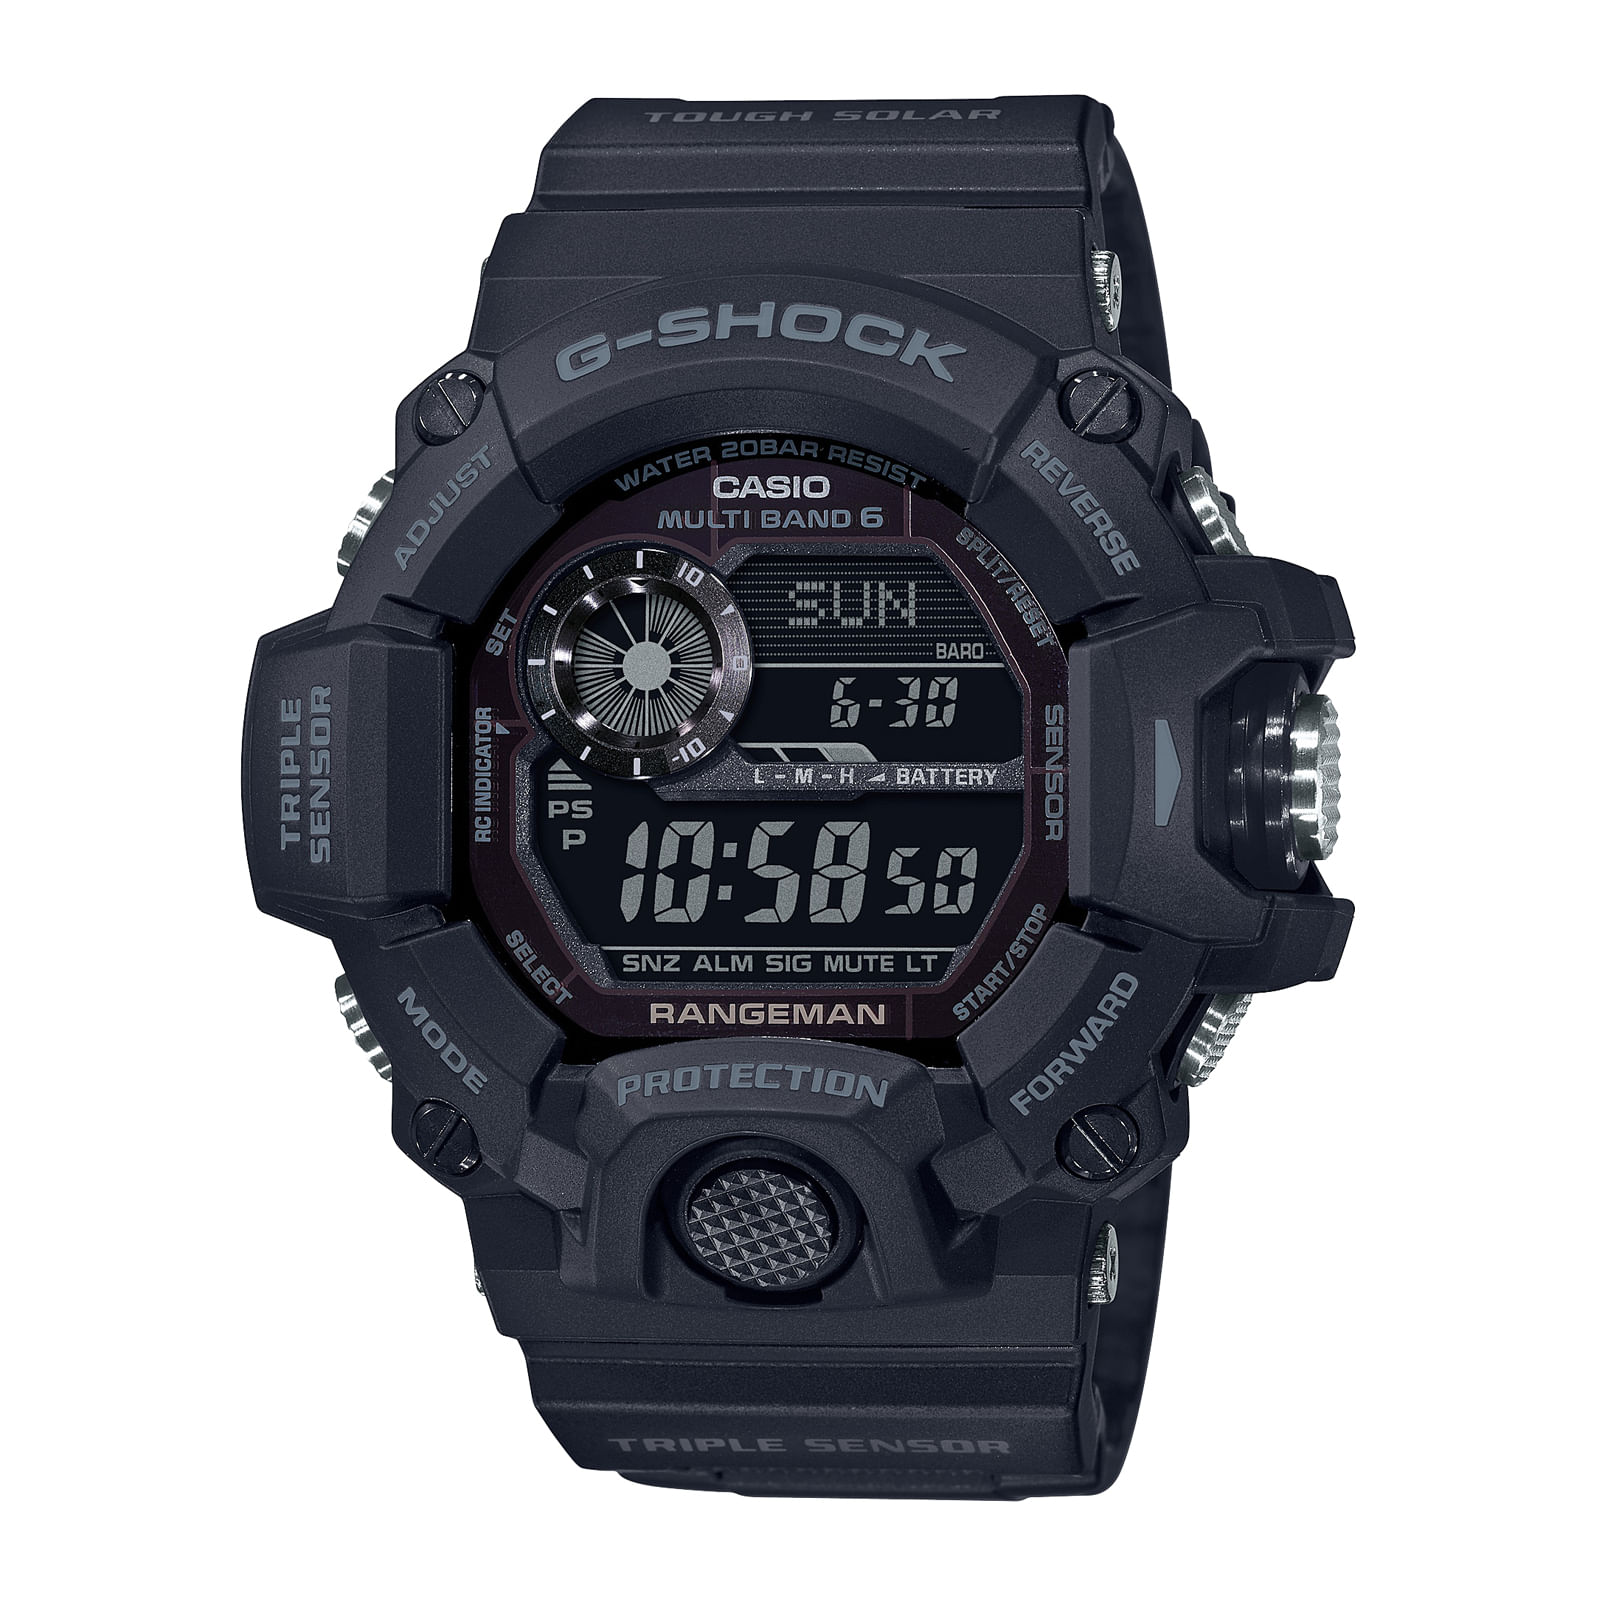 Reloj G-SHOCK GW-9400-1B Resina Hombre Negro